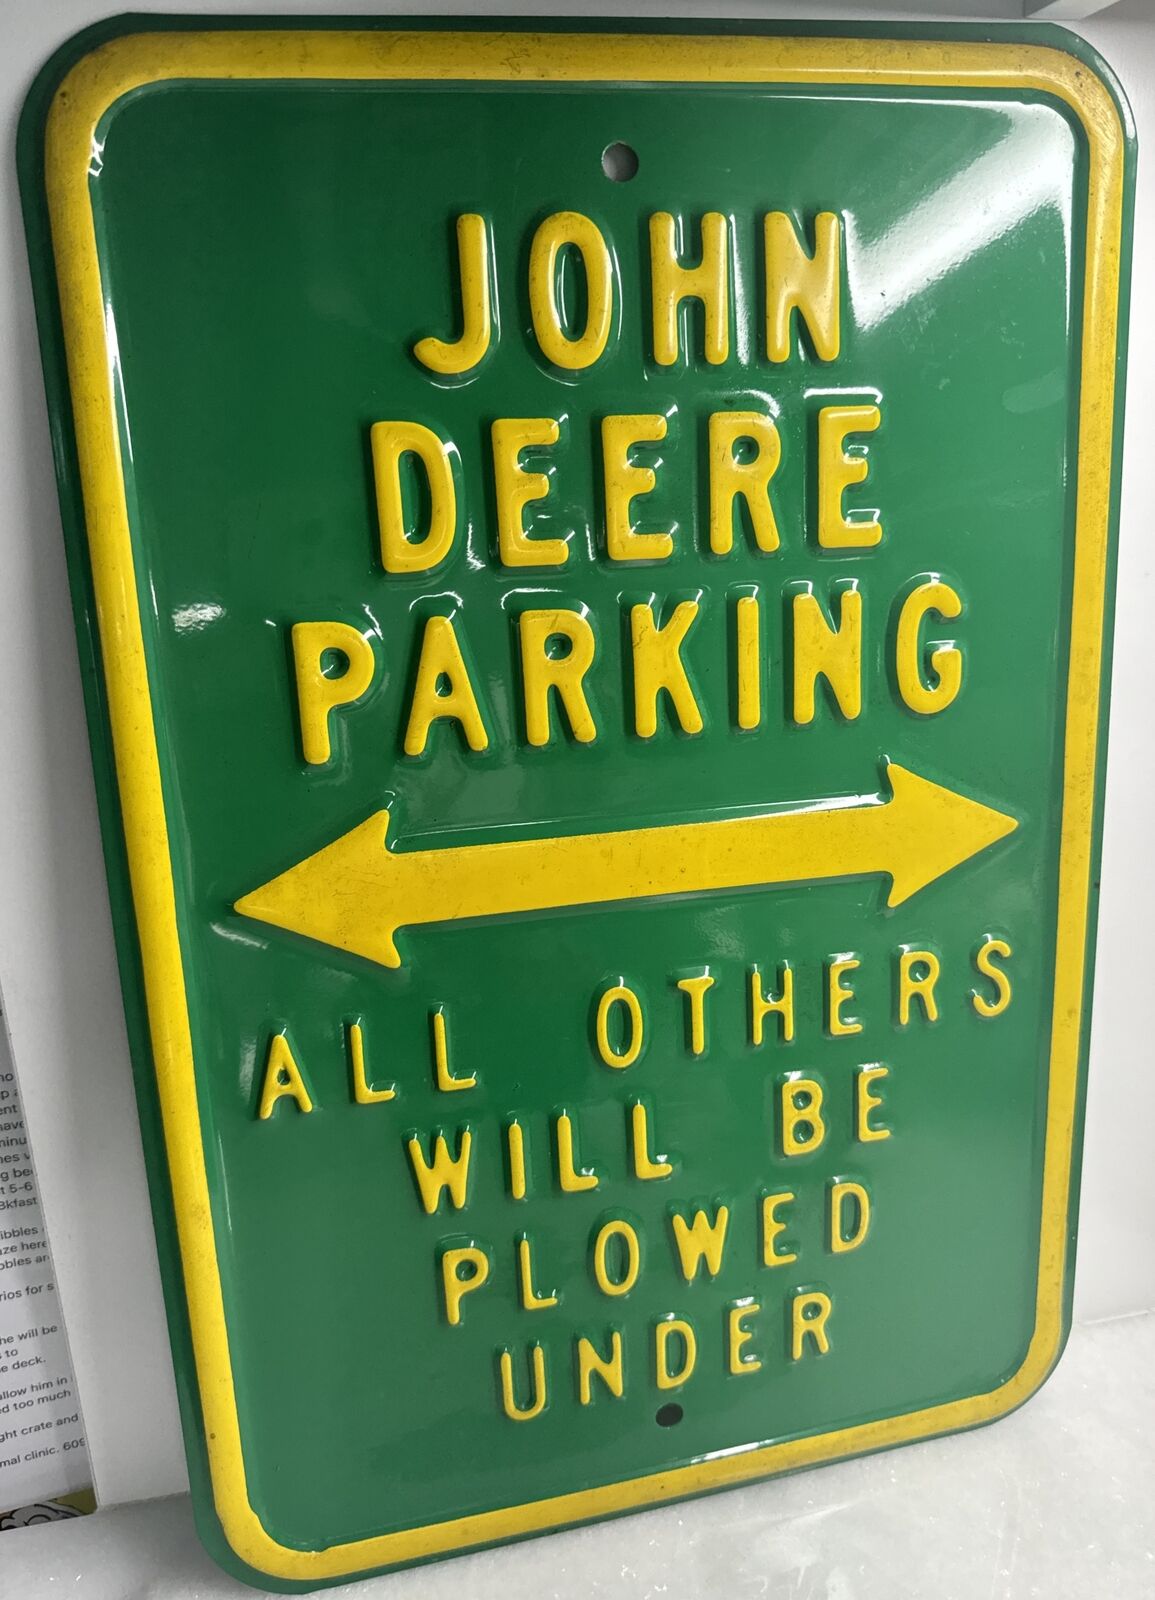 John Deere 12”x18” Heavy Metal Sign - John Deere Parking    All Others Will Be…